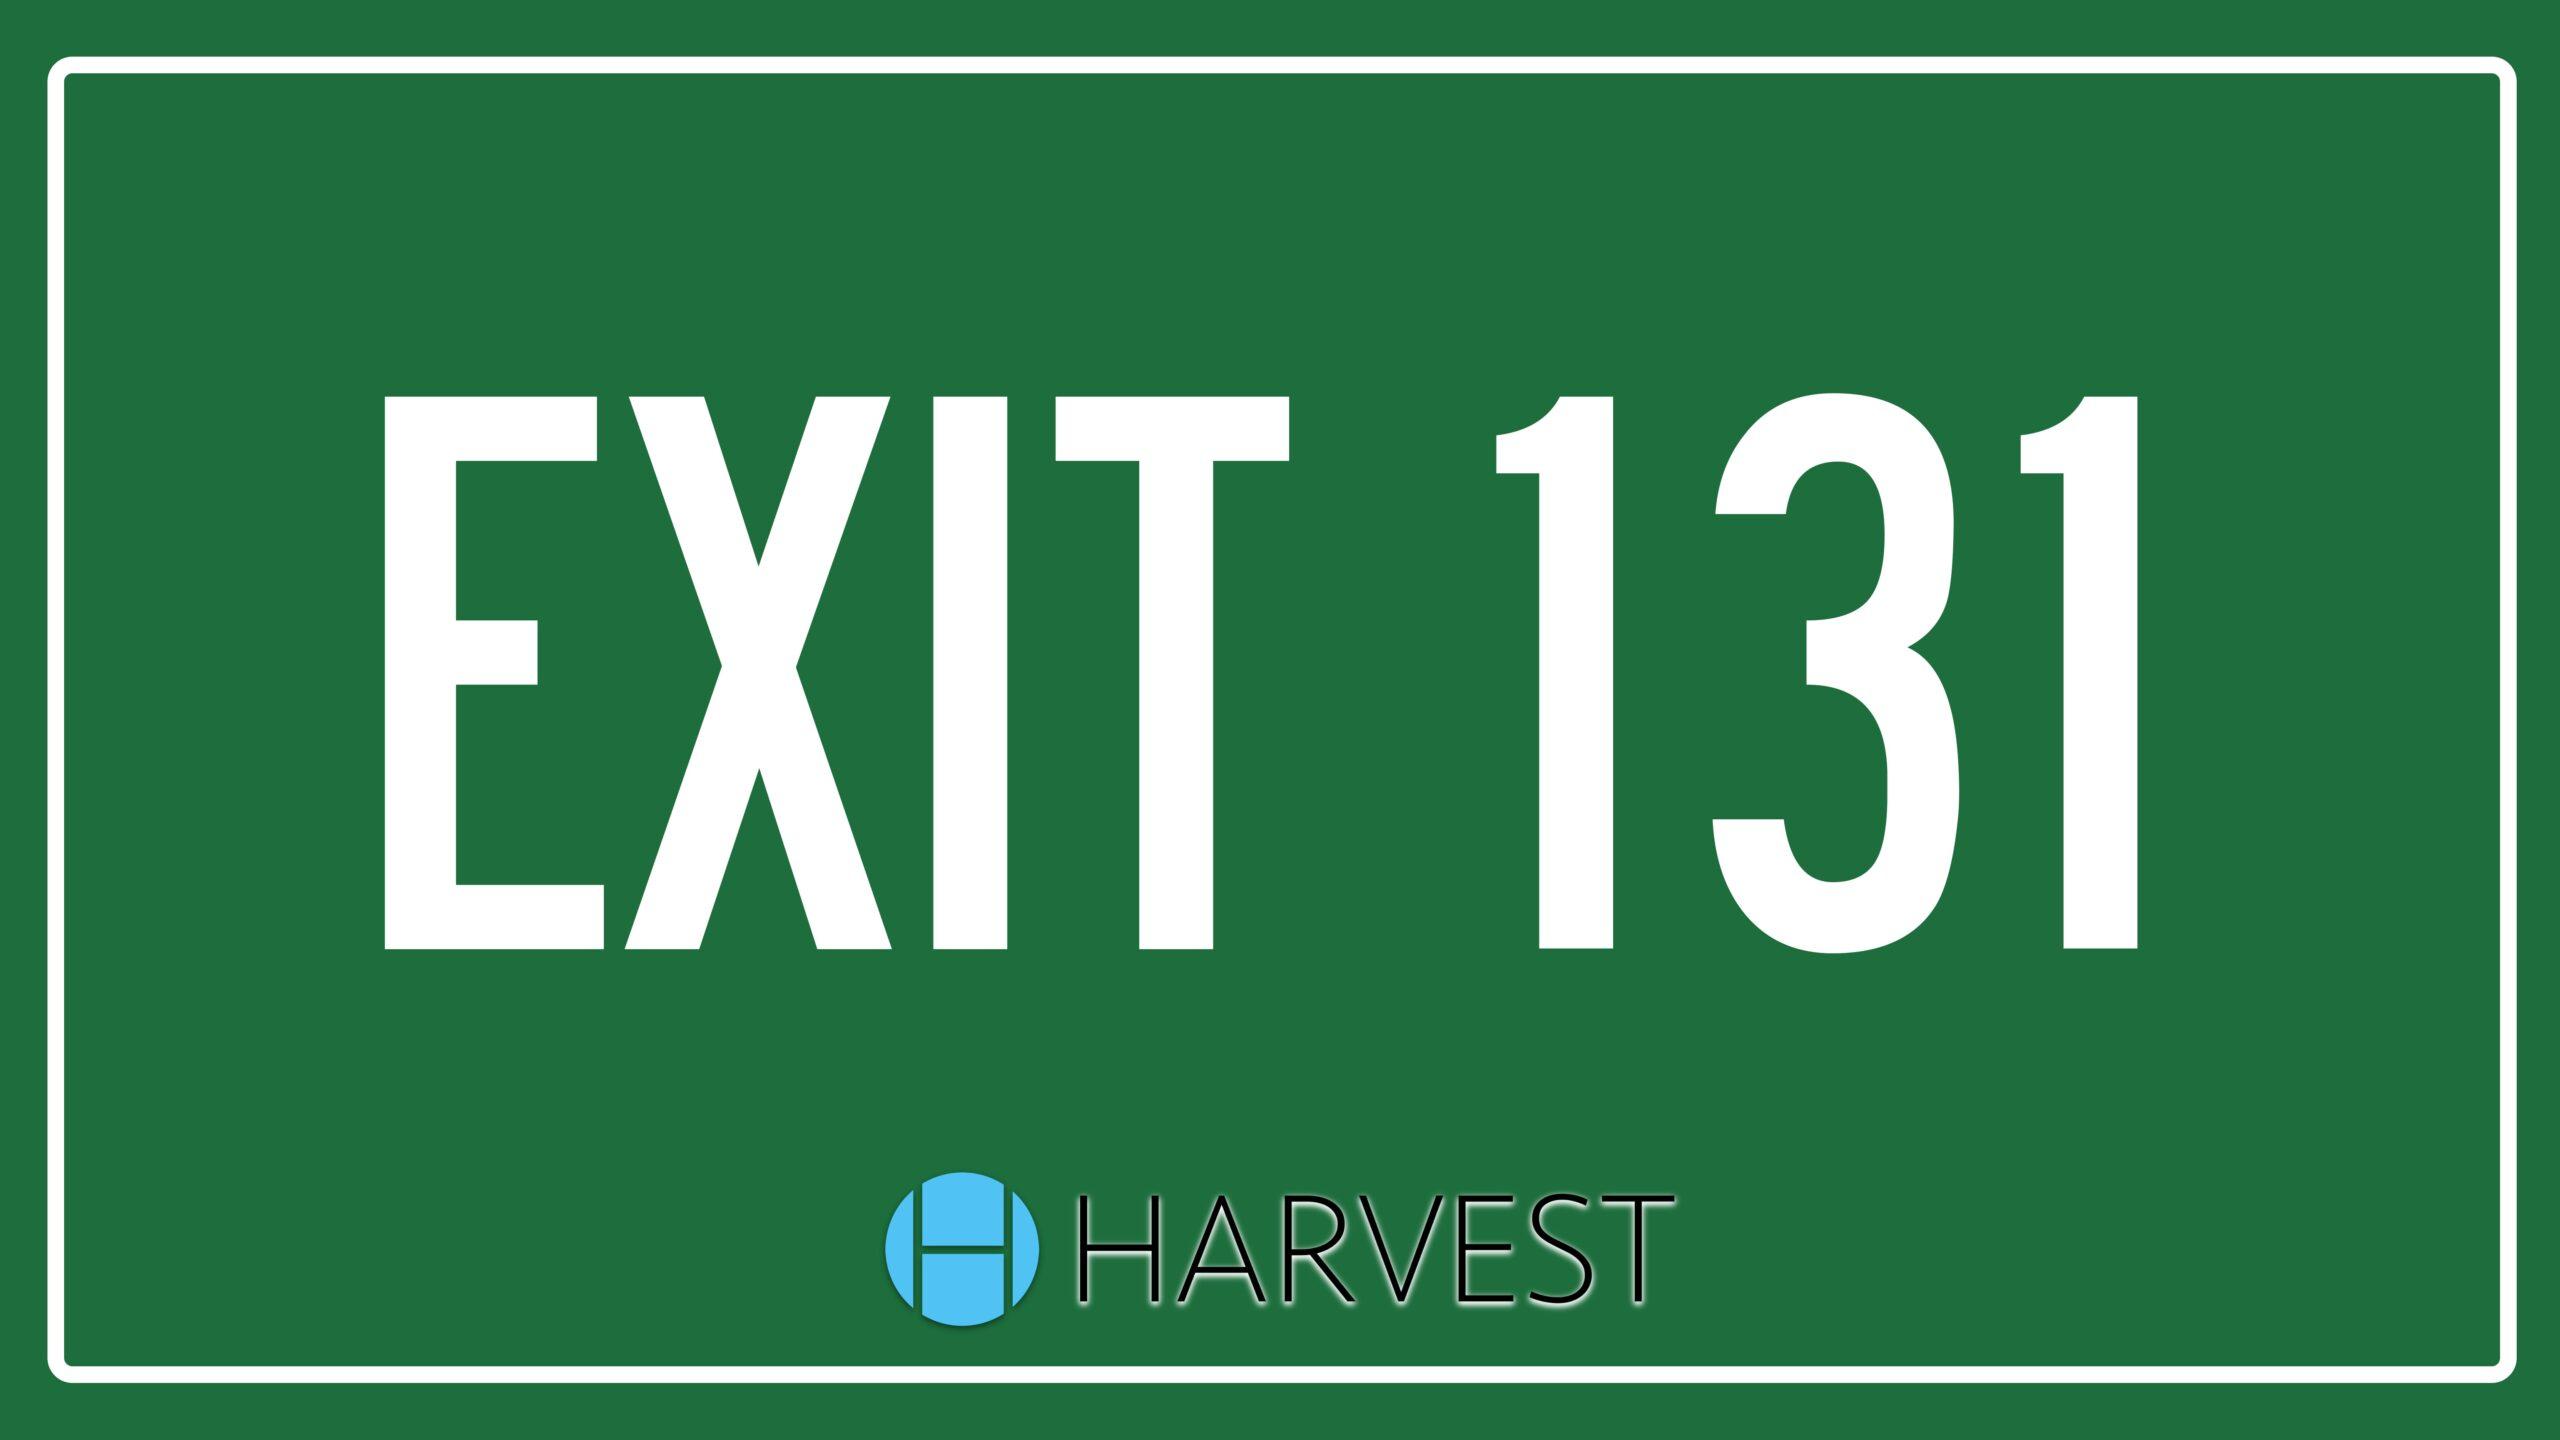 Exit 131